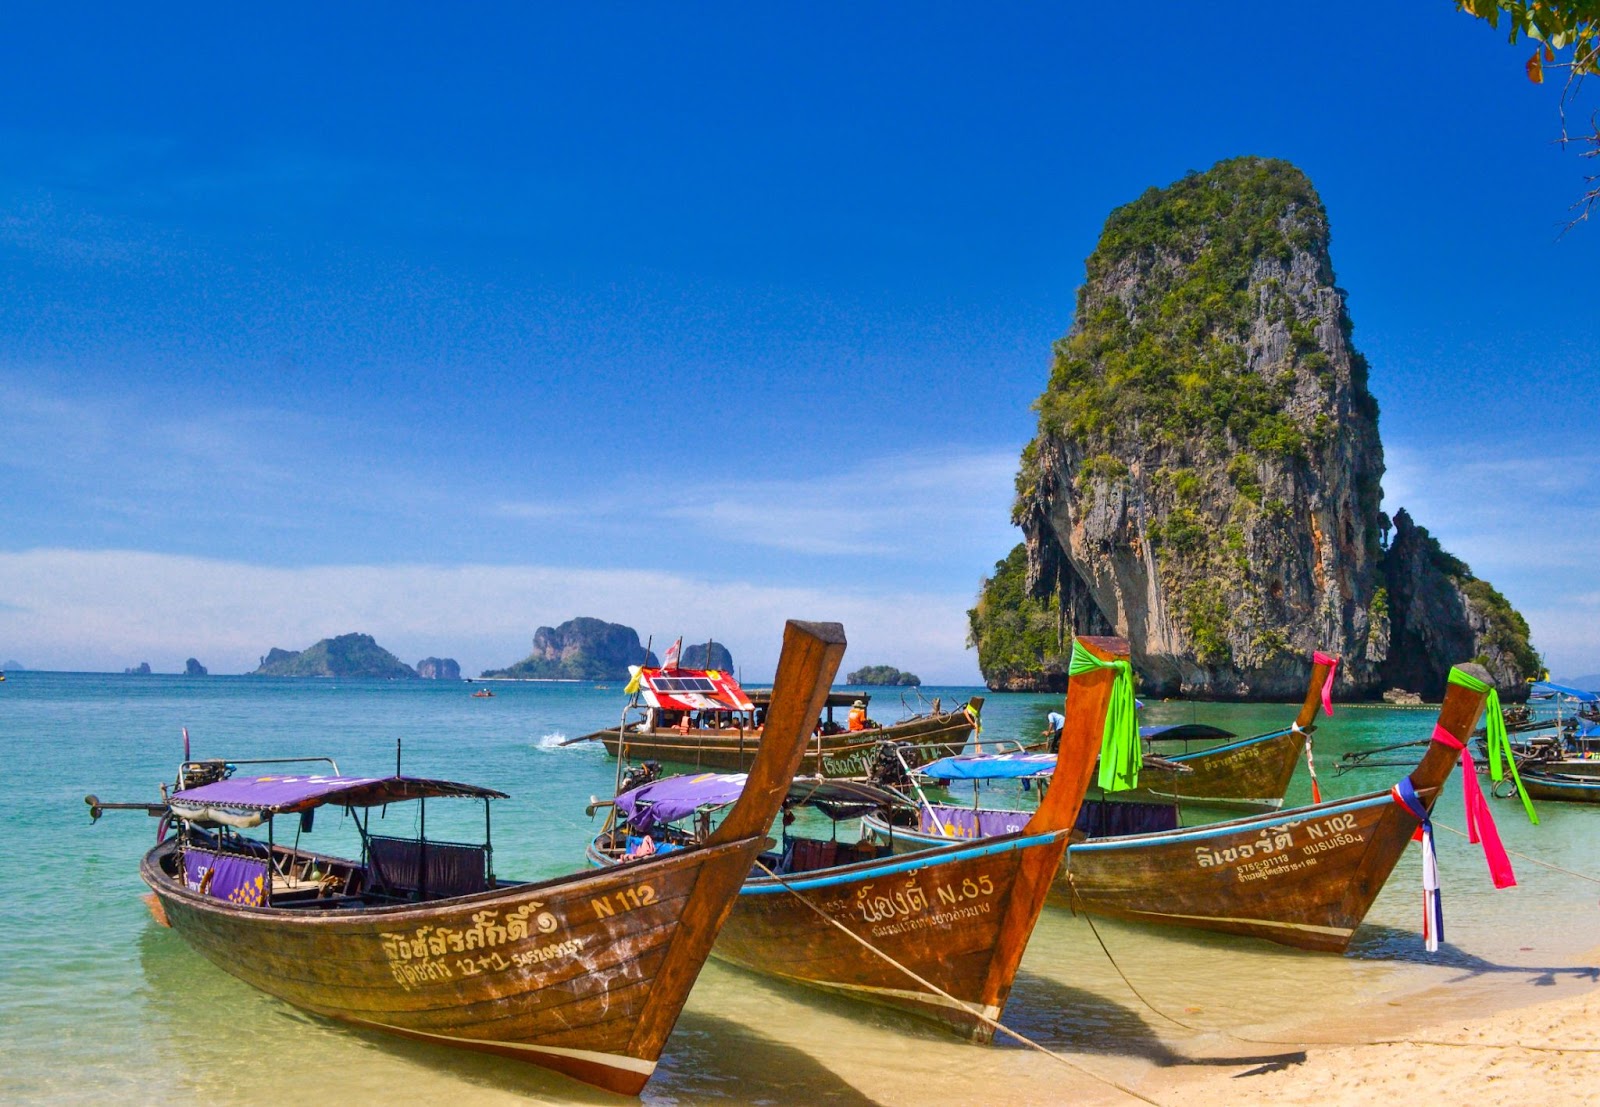 Wooden boats on a Thailand beach